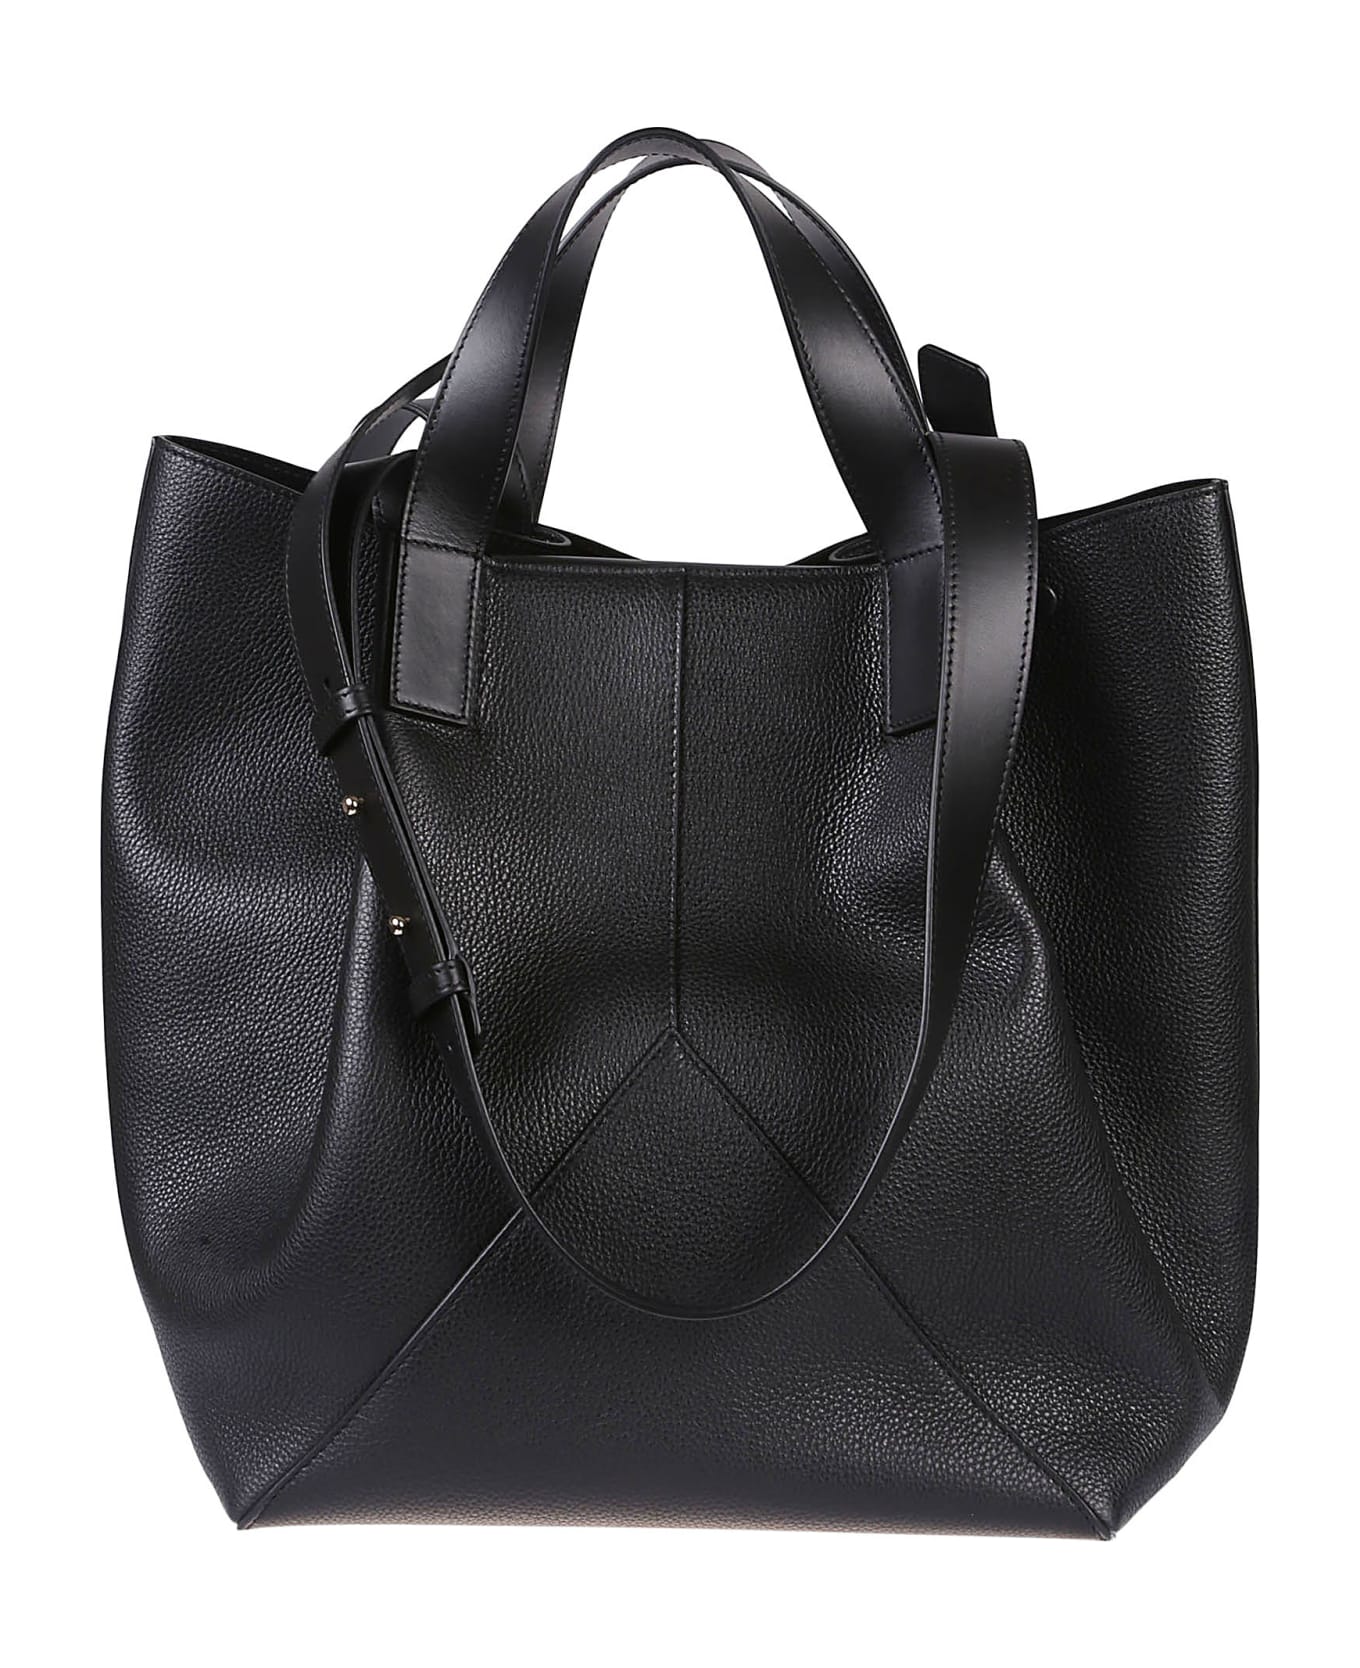 Victoria Beckham Medium Jumbo Shopping Bag - Black トートバッグ